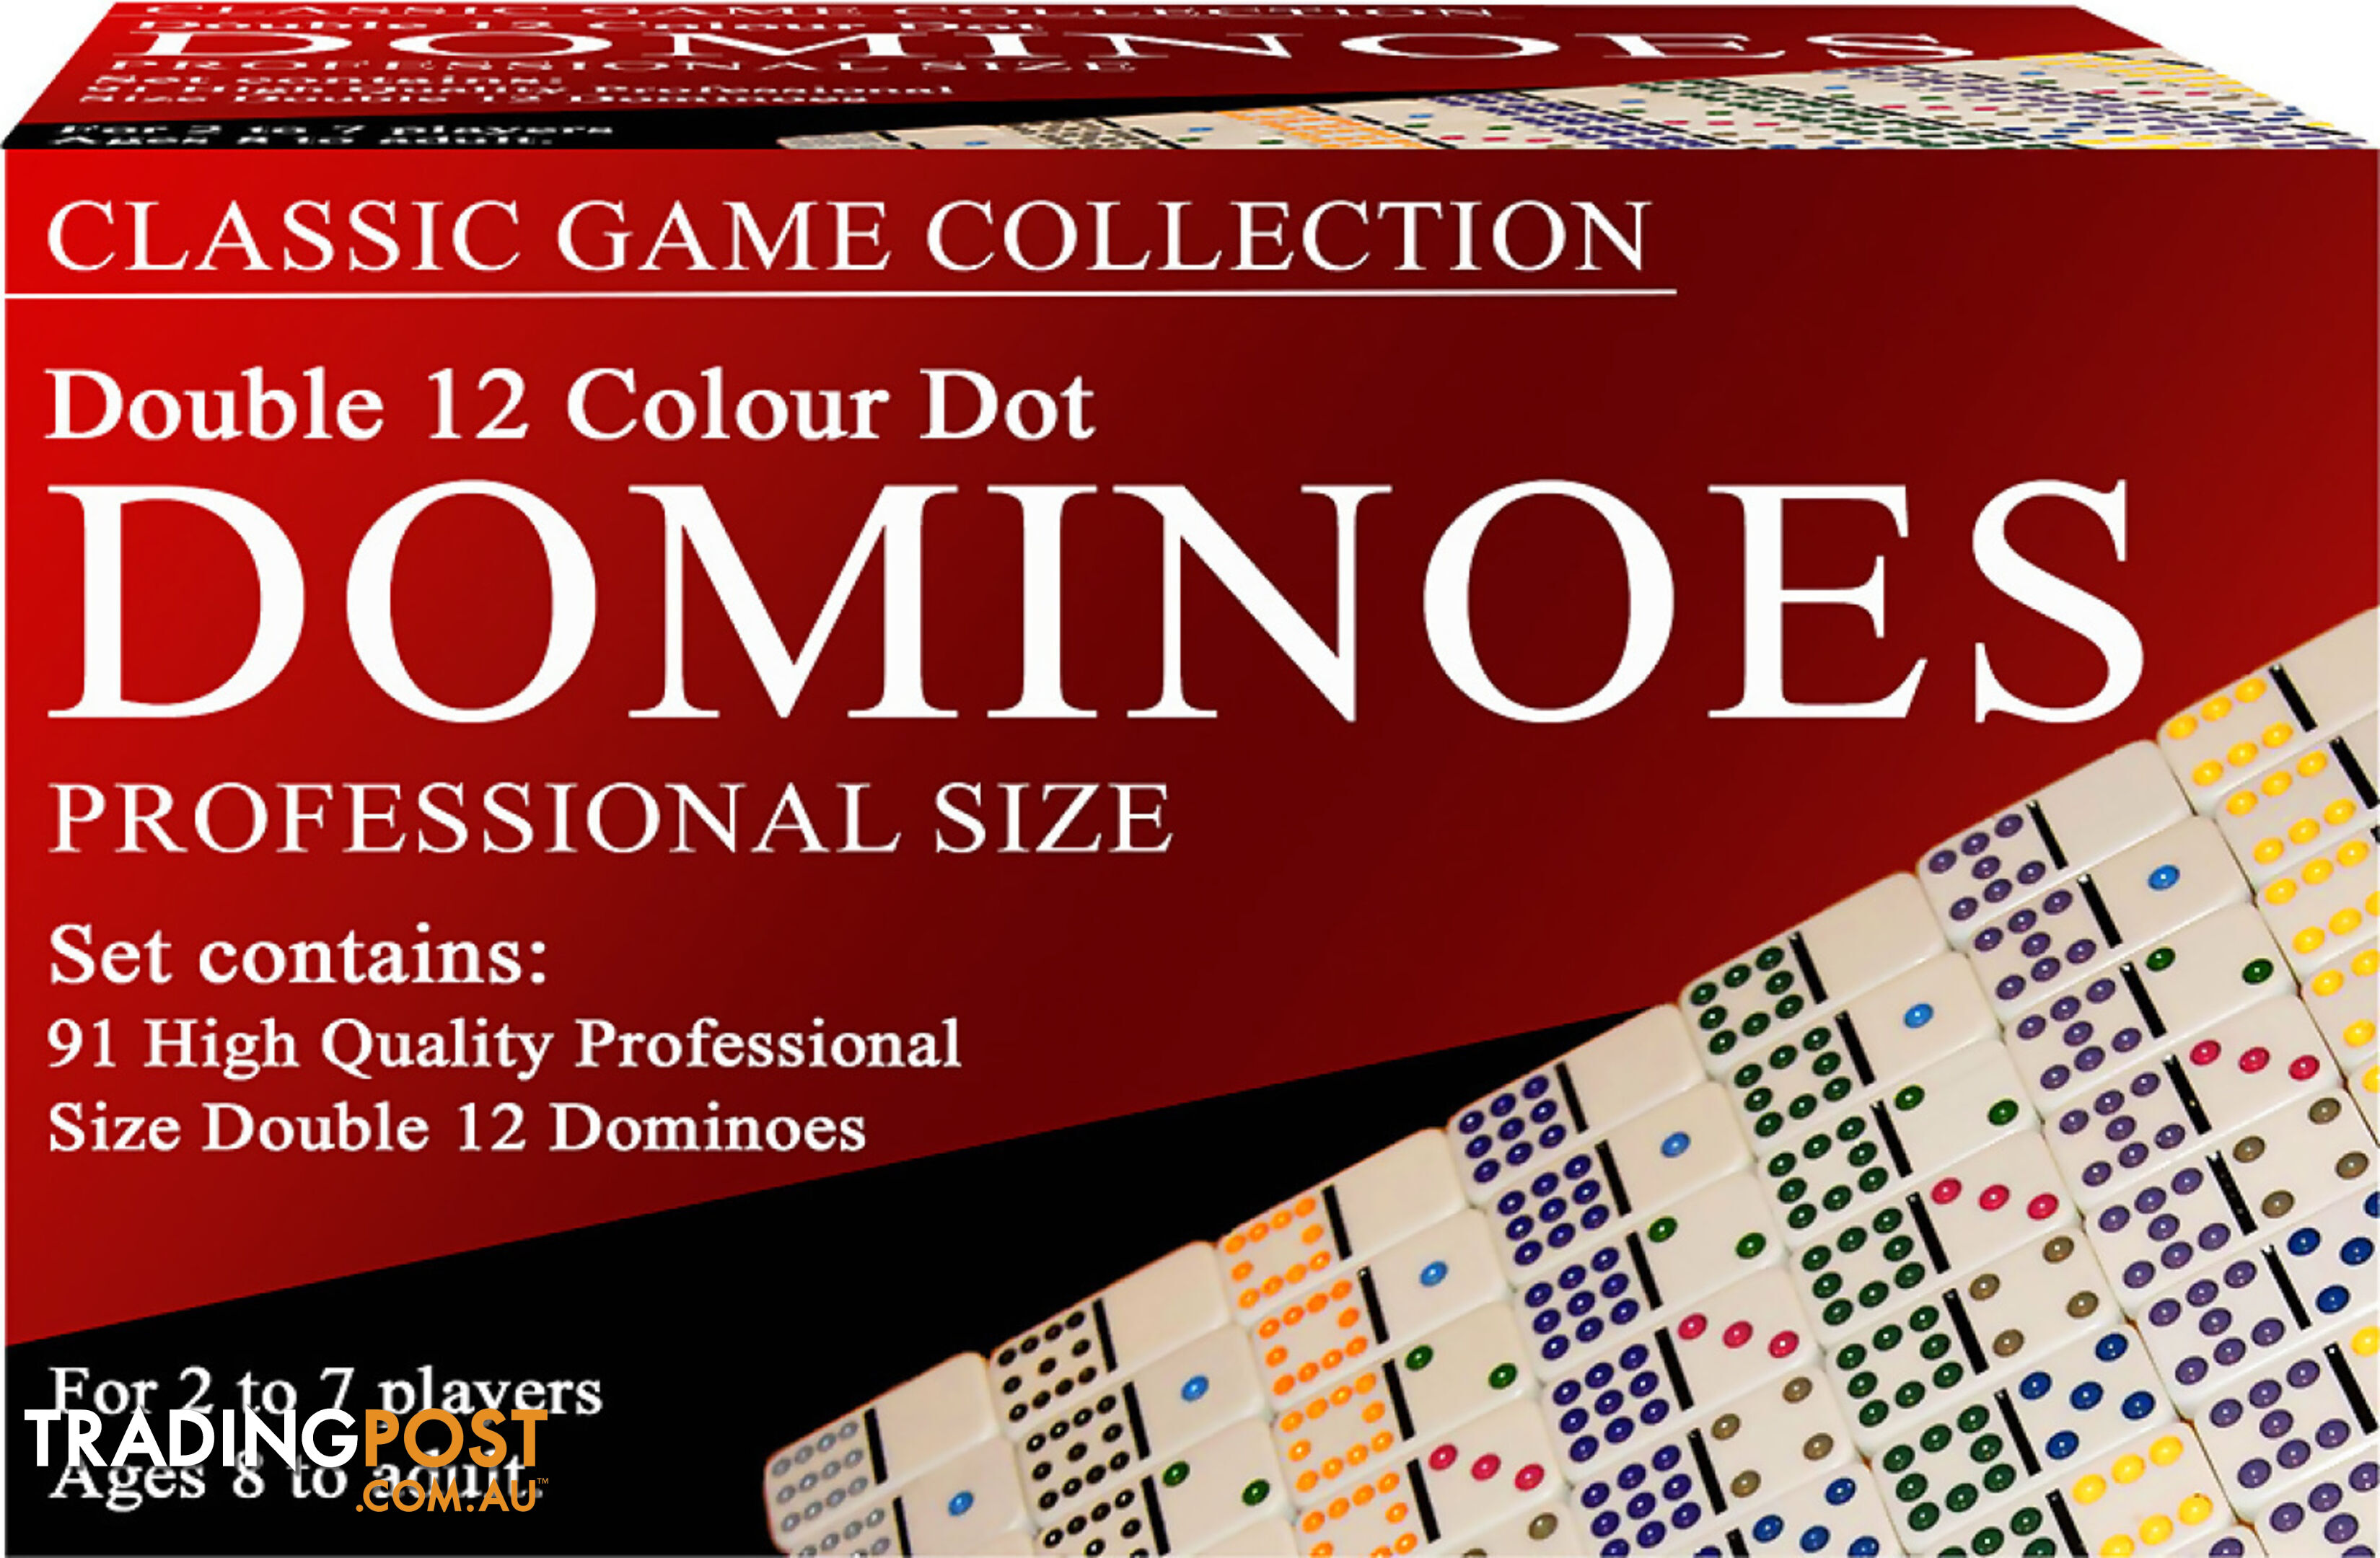 Dominoes Colour Dot Double 12 - Jdhsn16620 - 025766166203